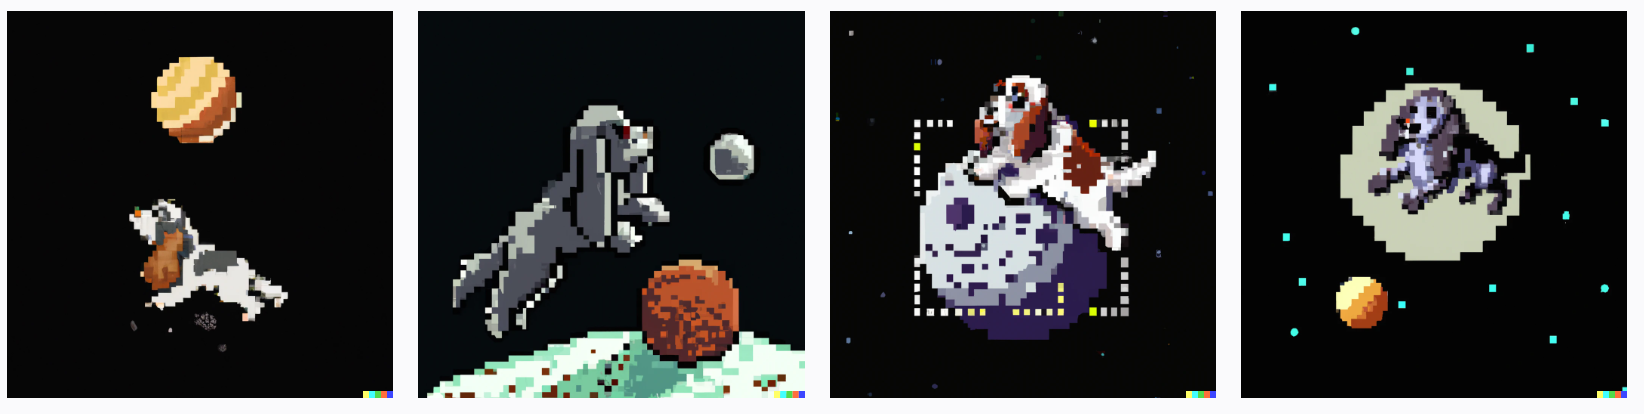 Russian hunting spaniel orbiting the moon saves Earth from a meteorite, digital art, pixel art